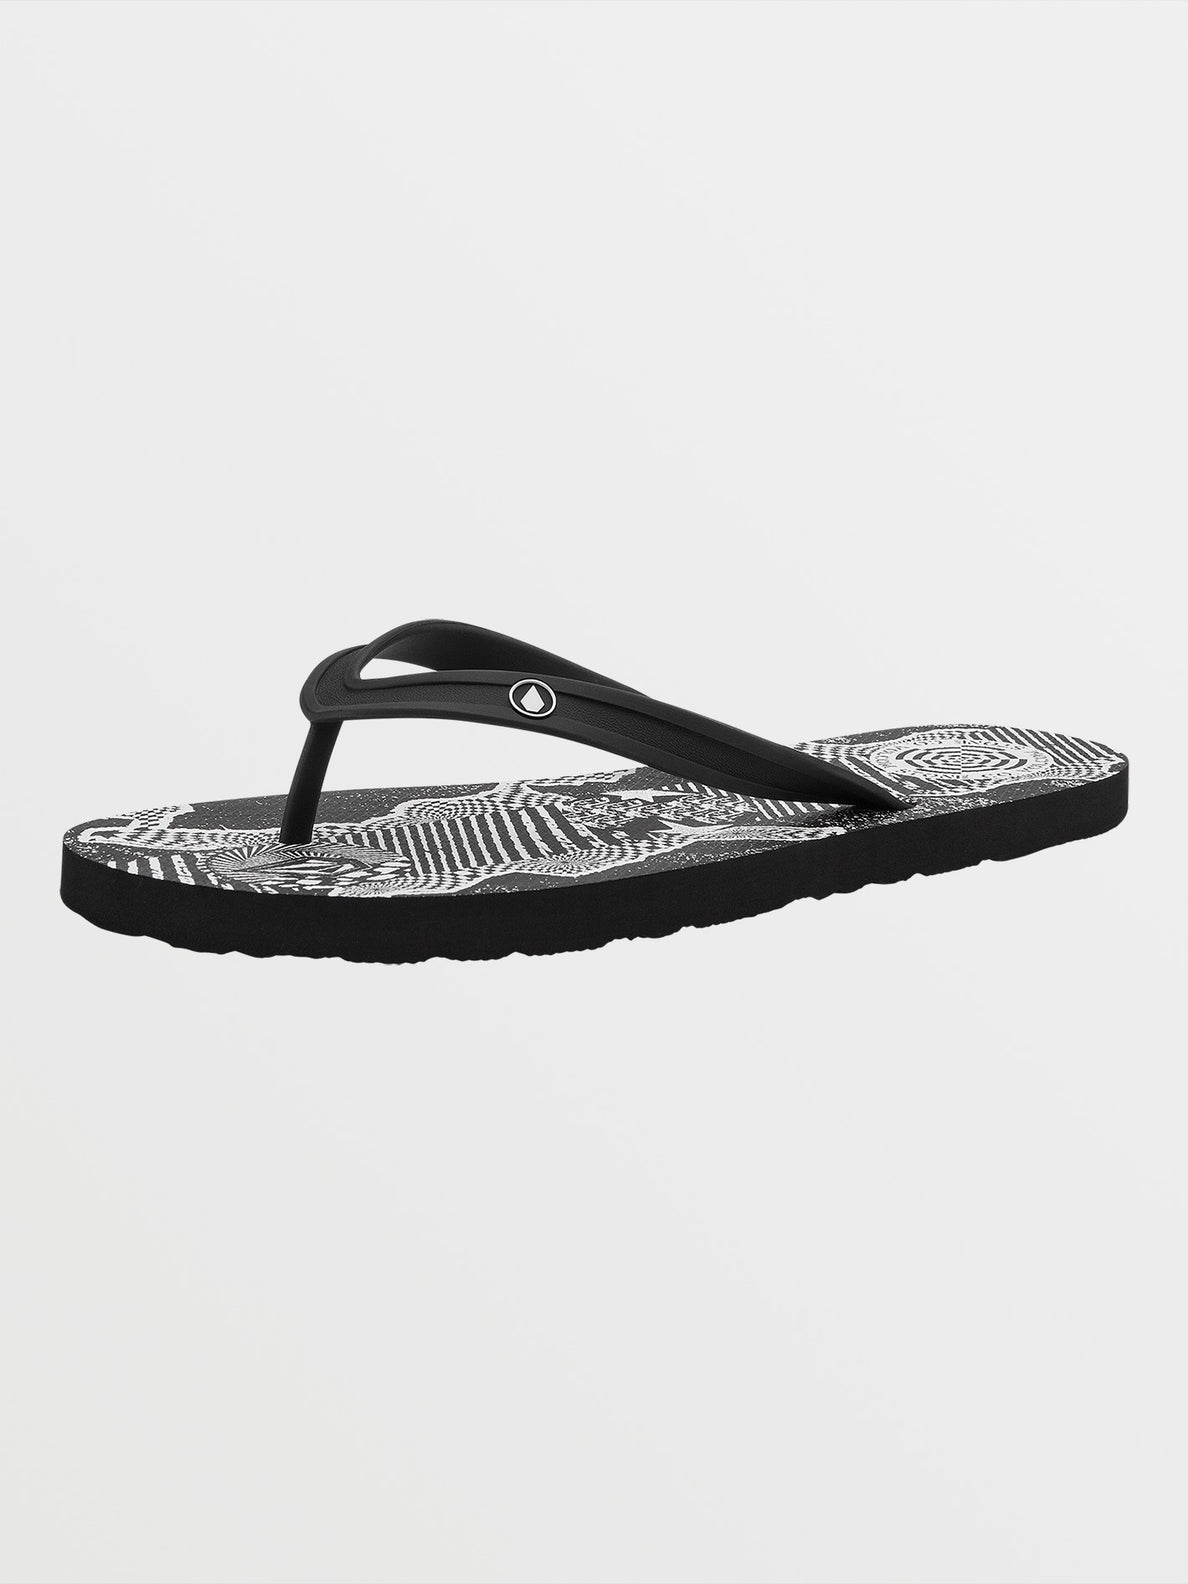 Rocker Sandals - Black Print